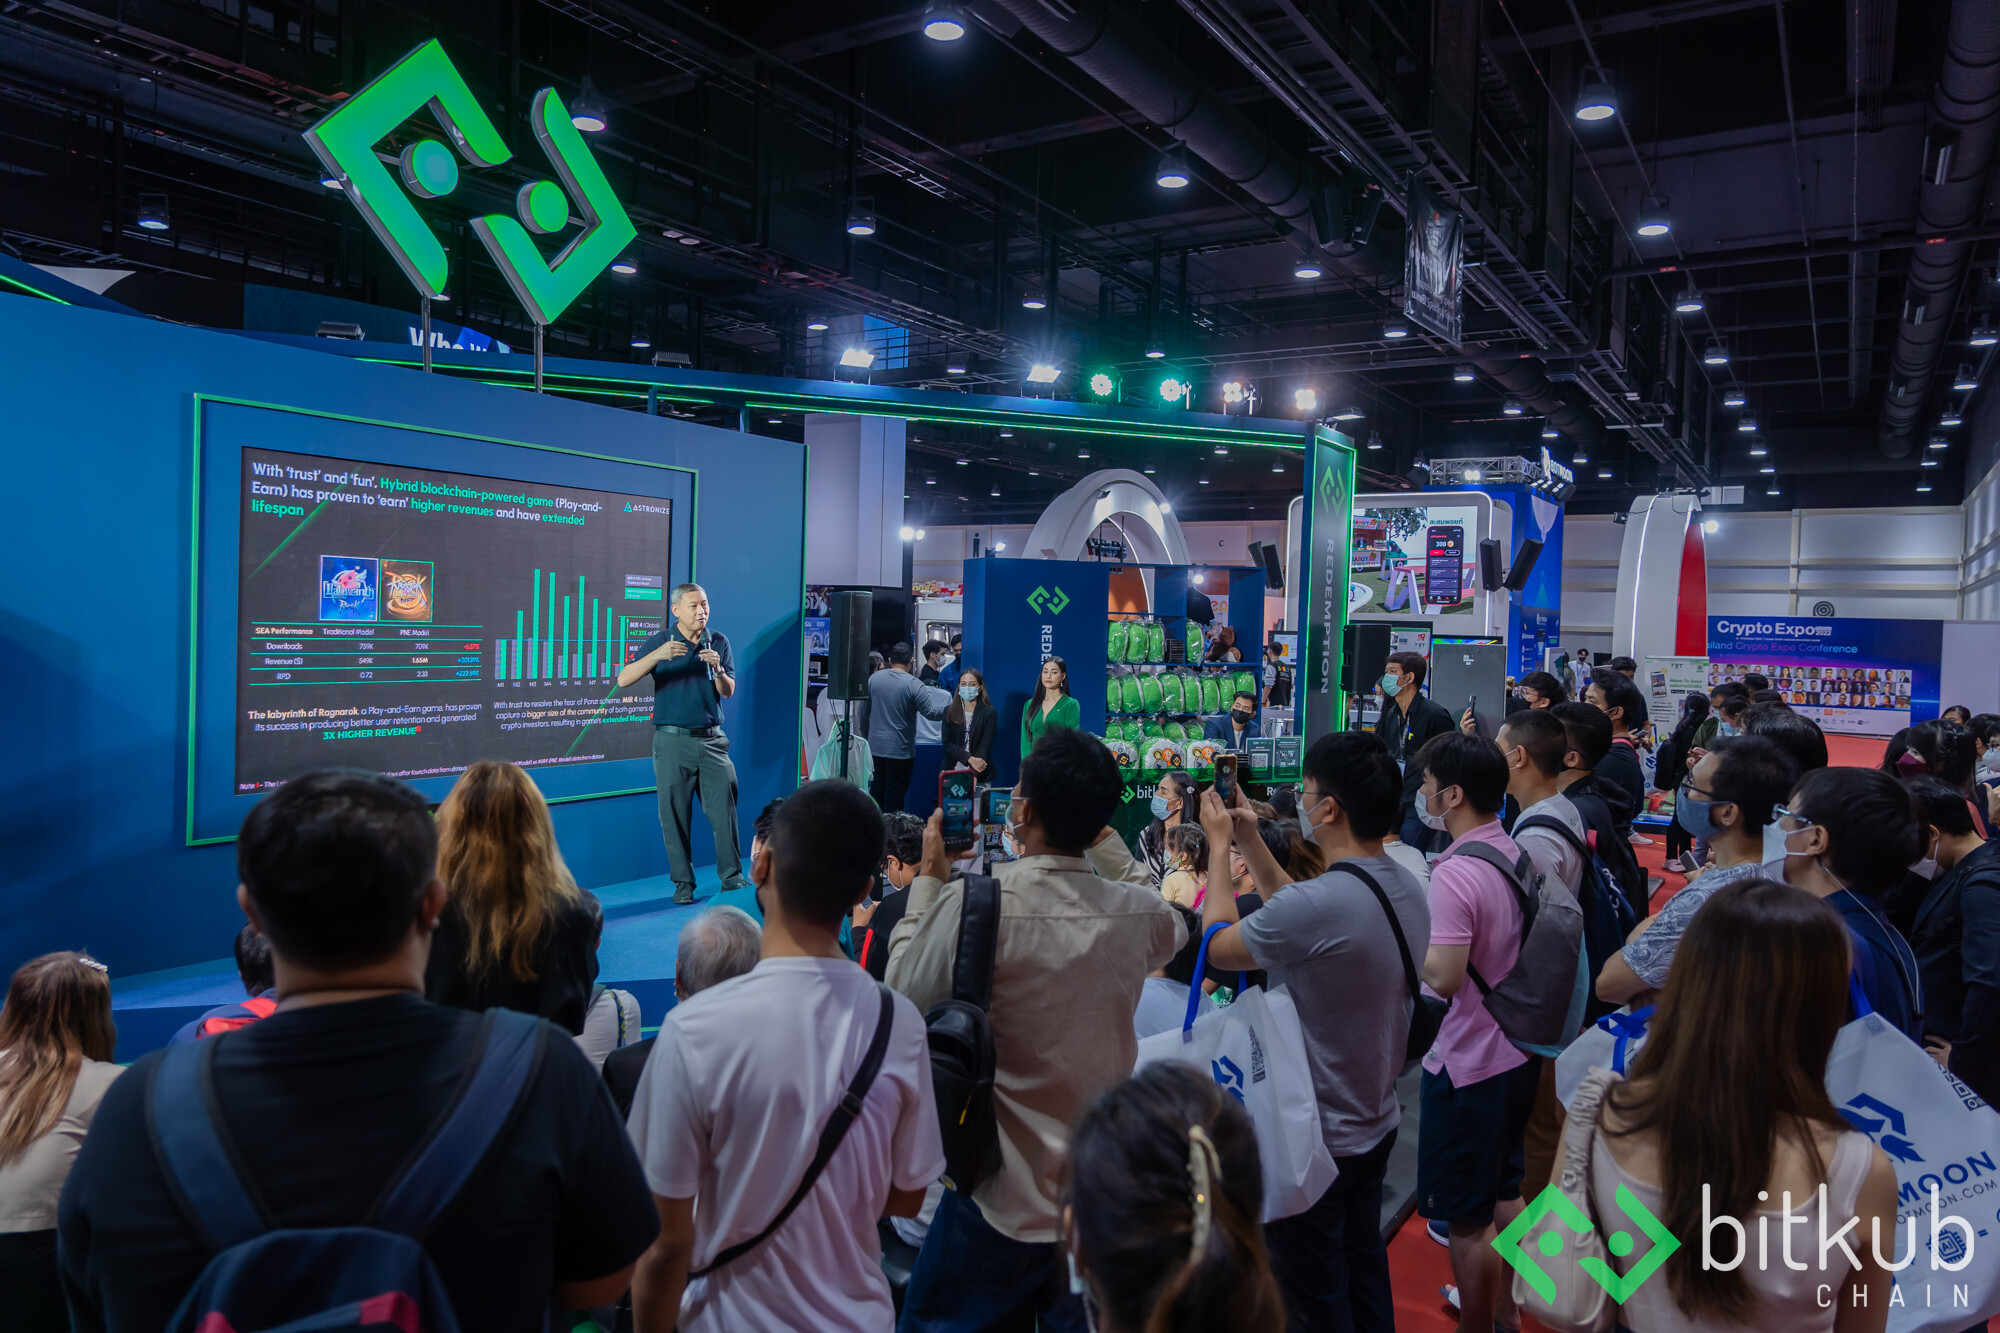 Astronize เขย่าวงการ GameFi ประกาศเคลื่อนทัพเจาะตลาดเอเชียตะวันออกเฉียงใต้ พร้อมเผย Roadmap ระยะยาว ณ งาน Thailand Crypto Expo 2022